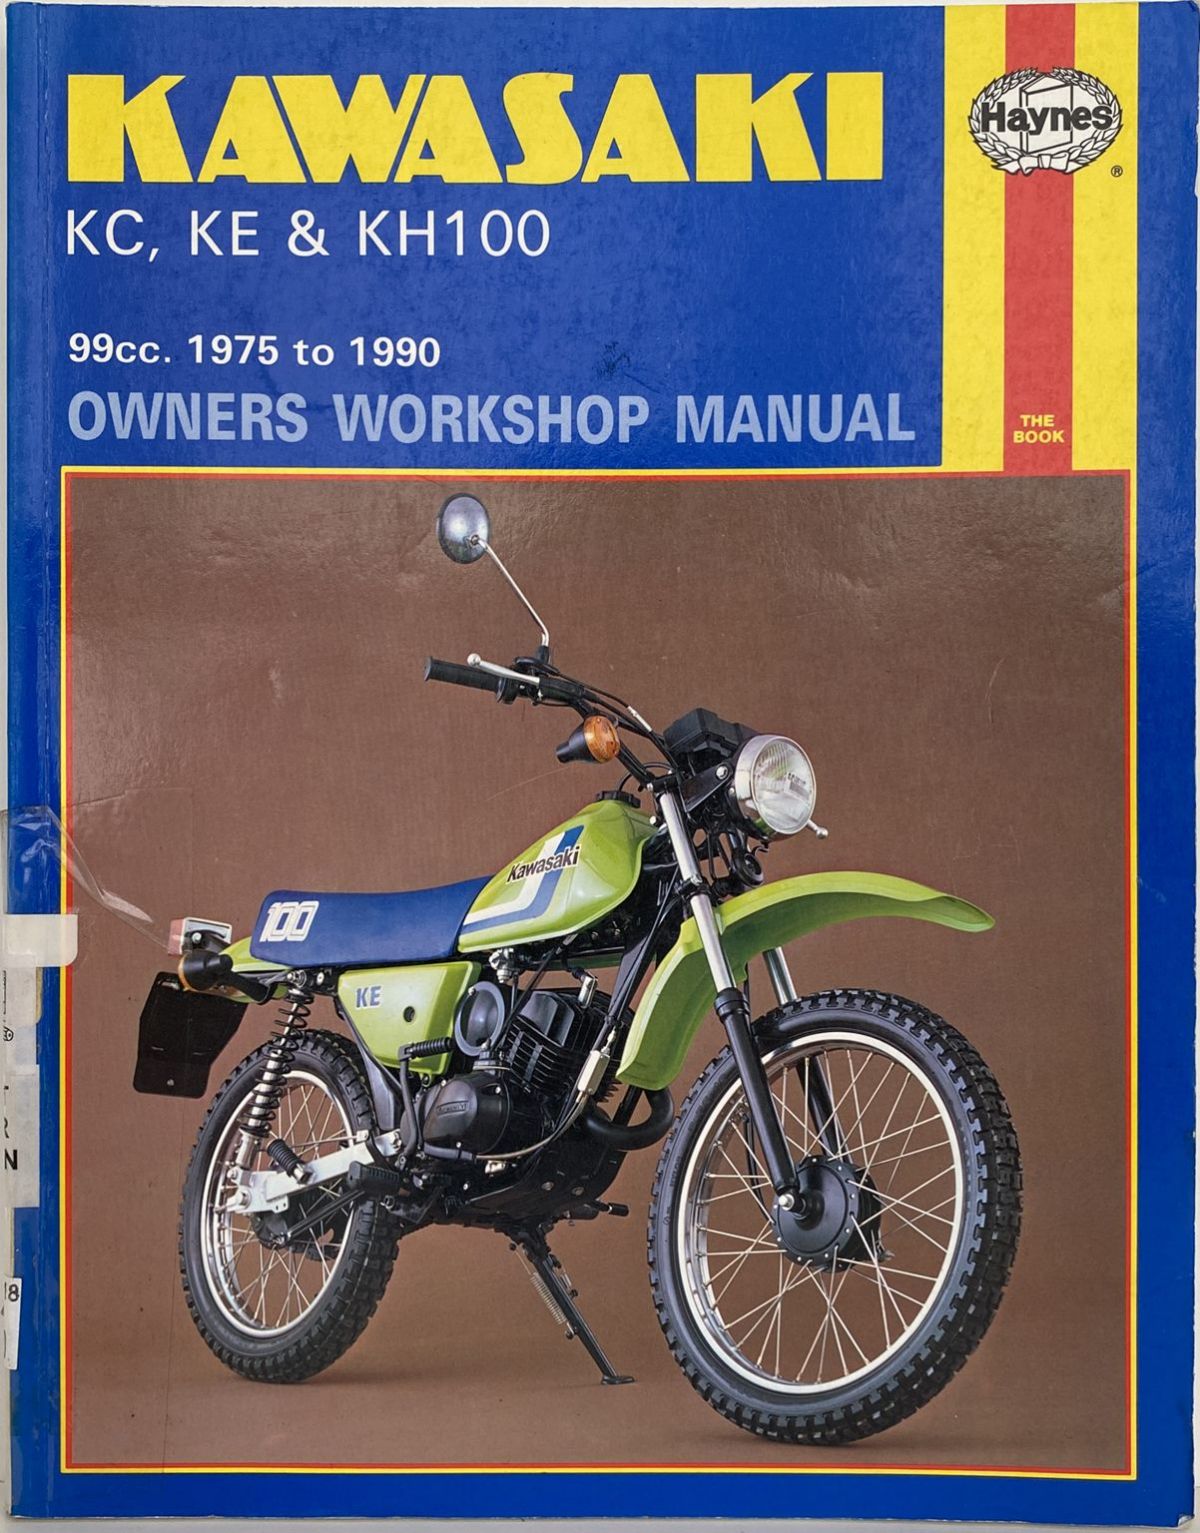 KAWASAKI KC, KE & KH 100, 1975 to 1990 - Motorcycle Owners Workshop Manual